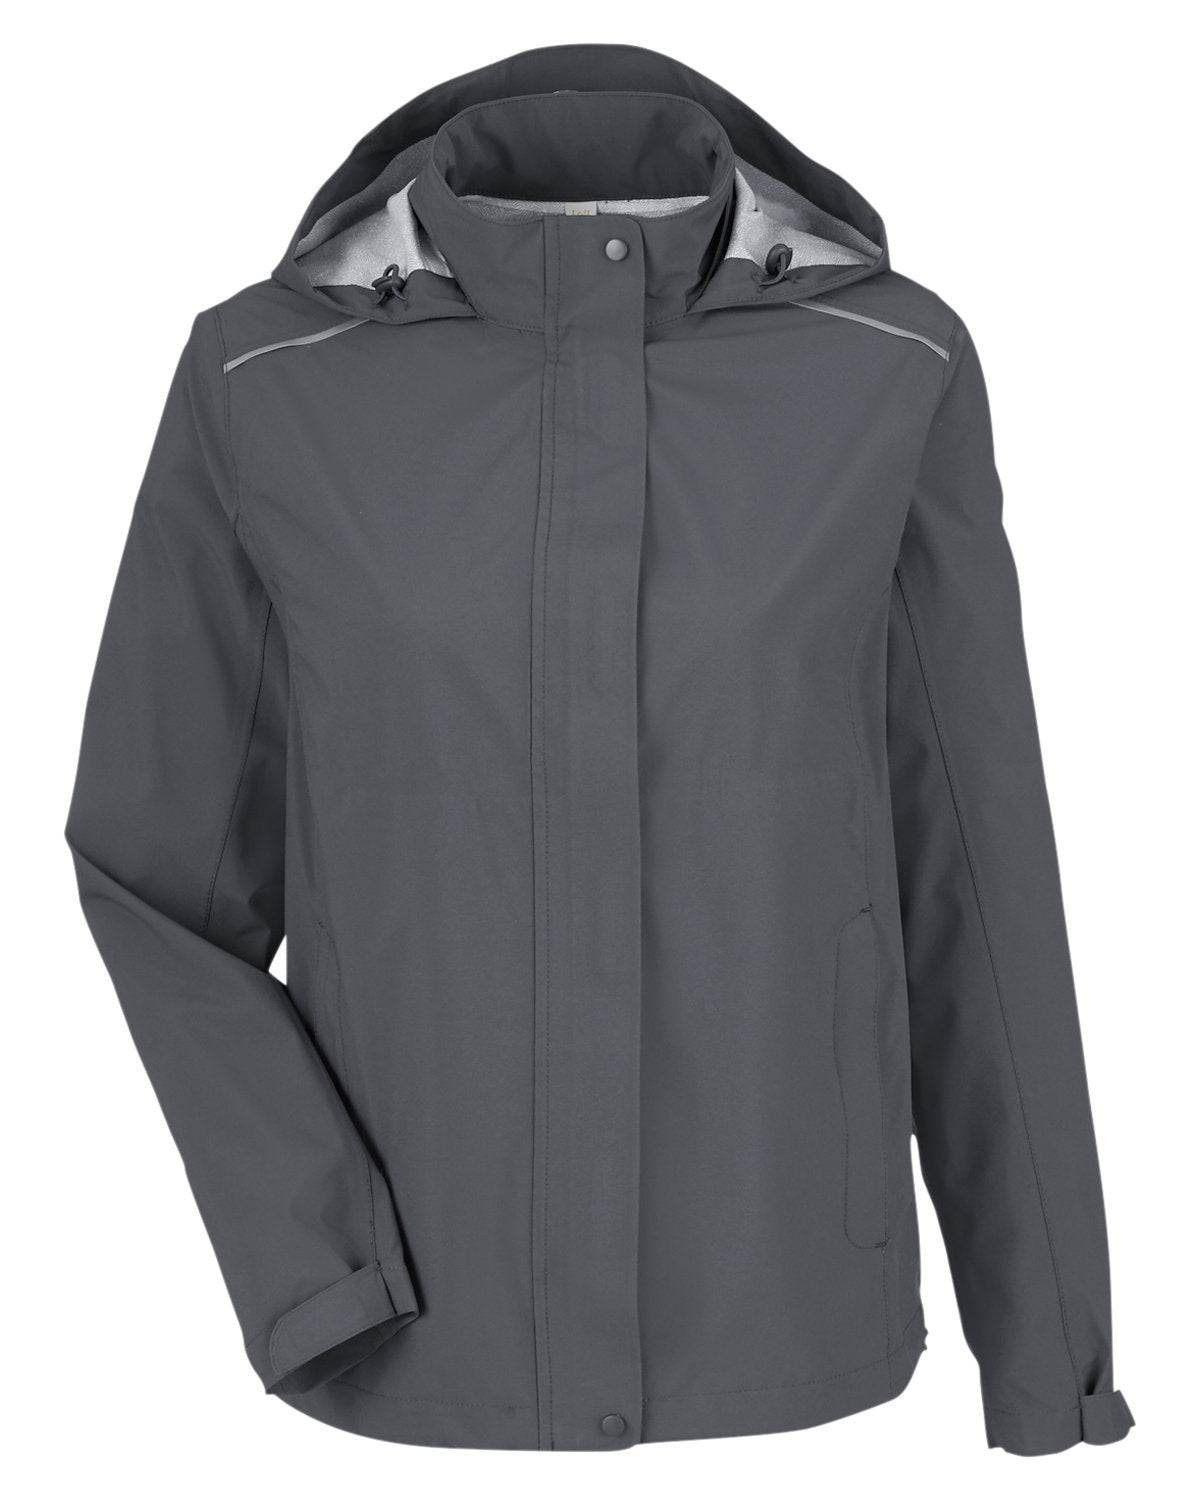 Core365 Ladies' Packable Rain Jacket